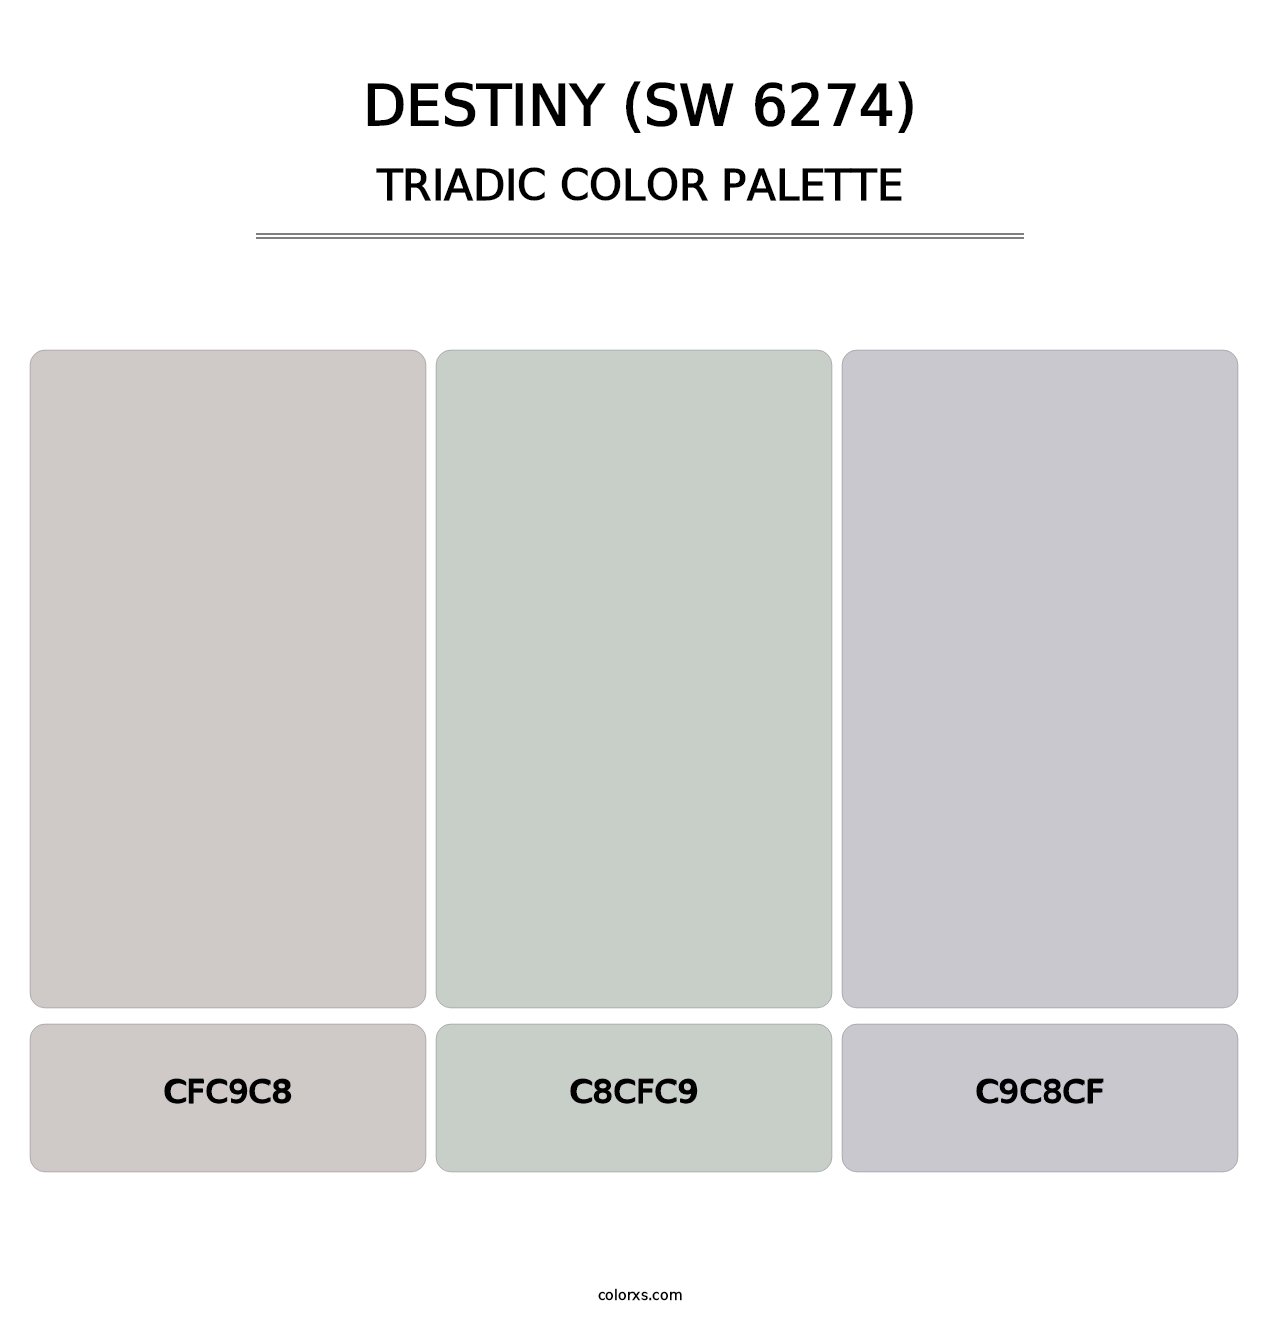 Destiny (SW 6274) - Triadic Color Palette